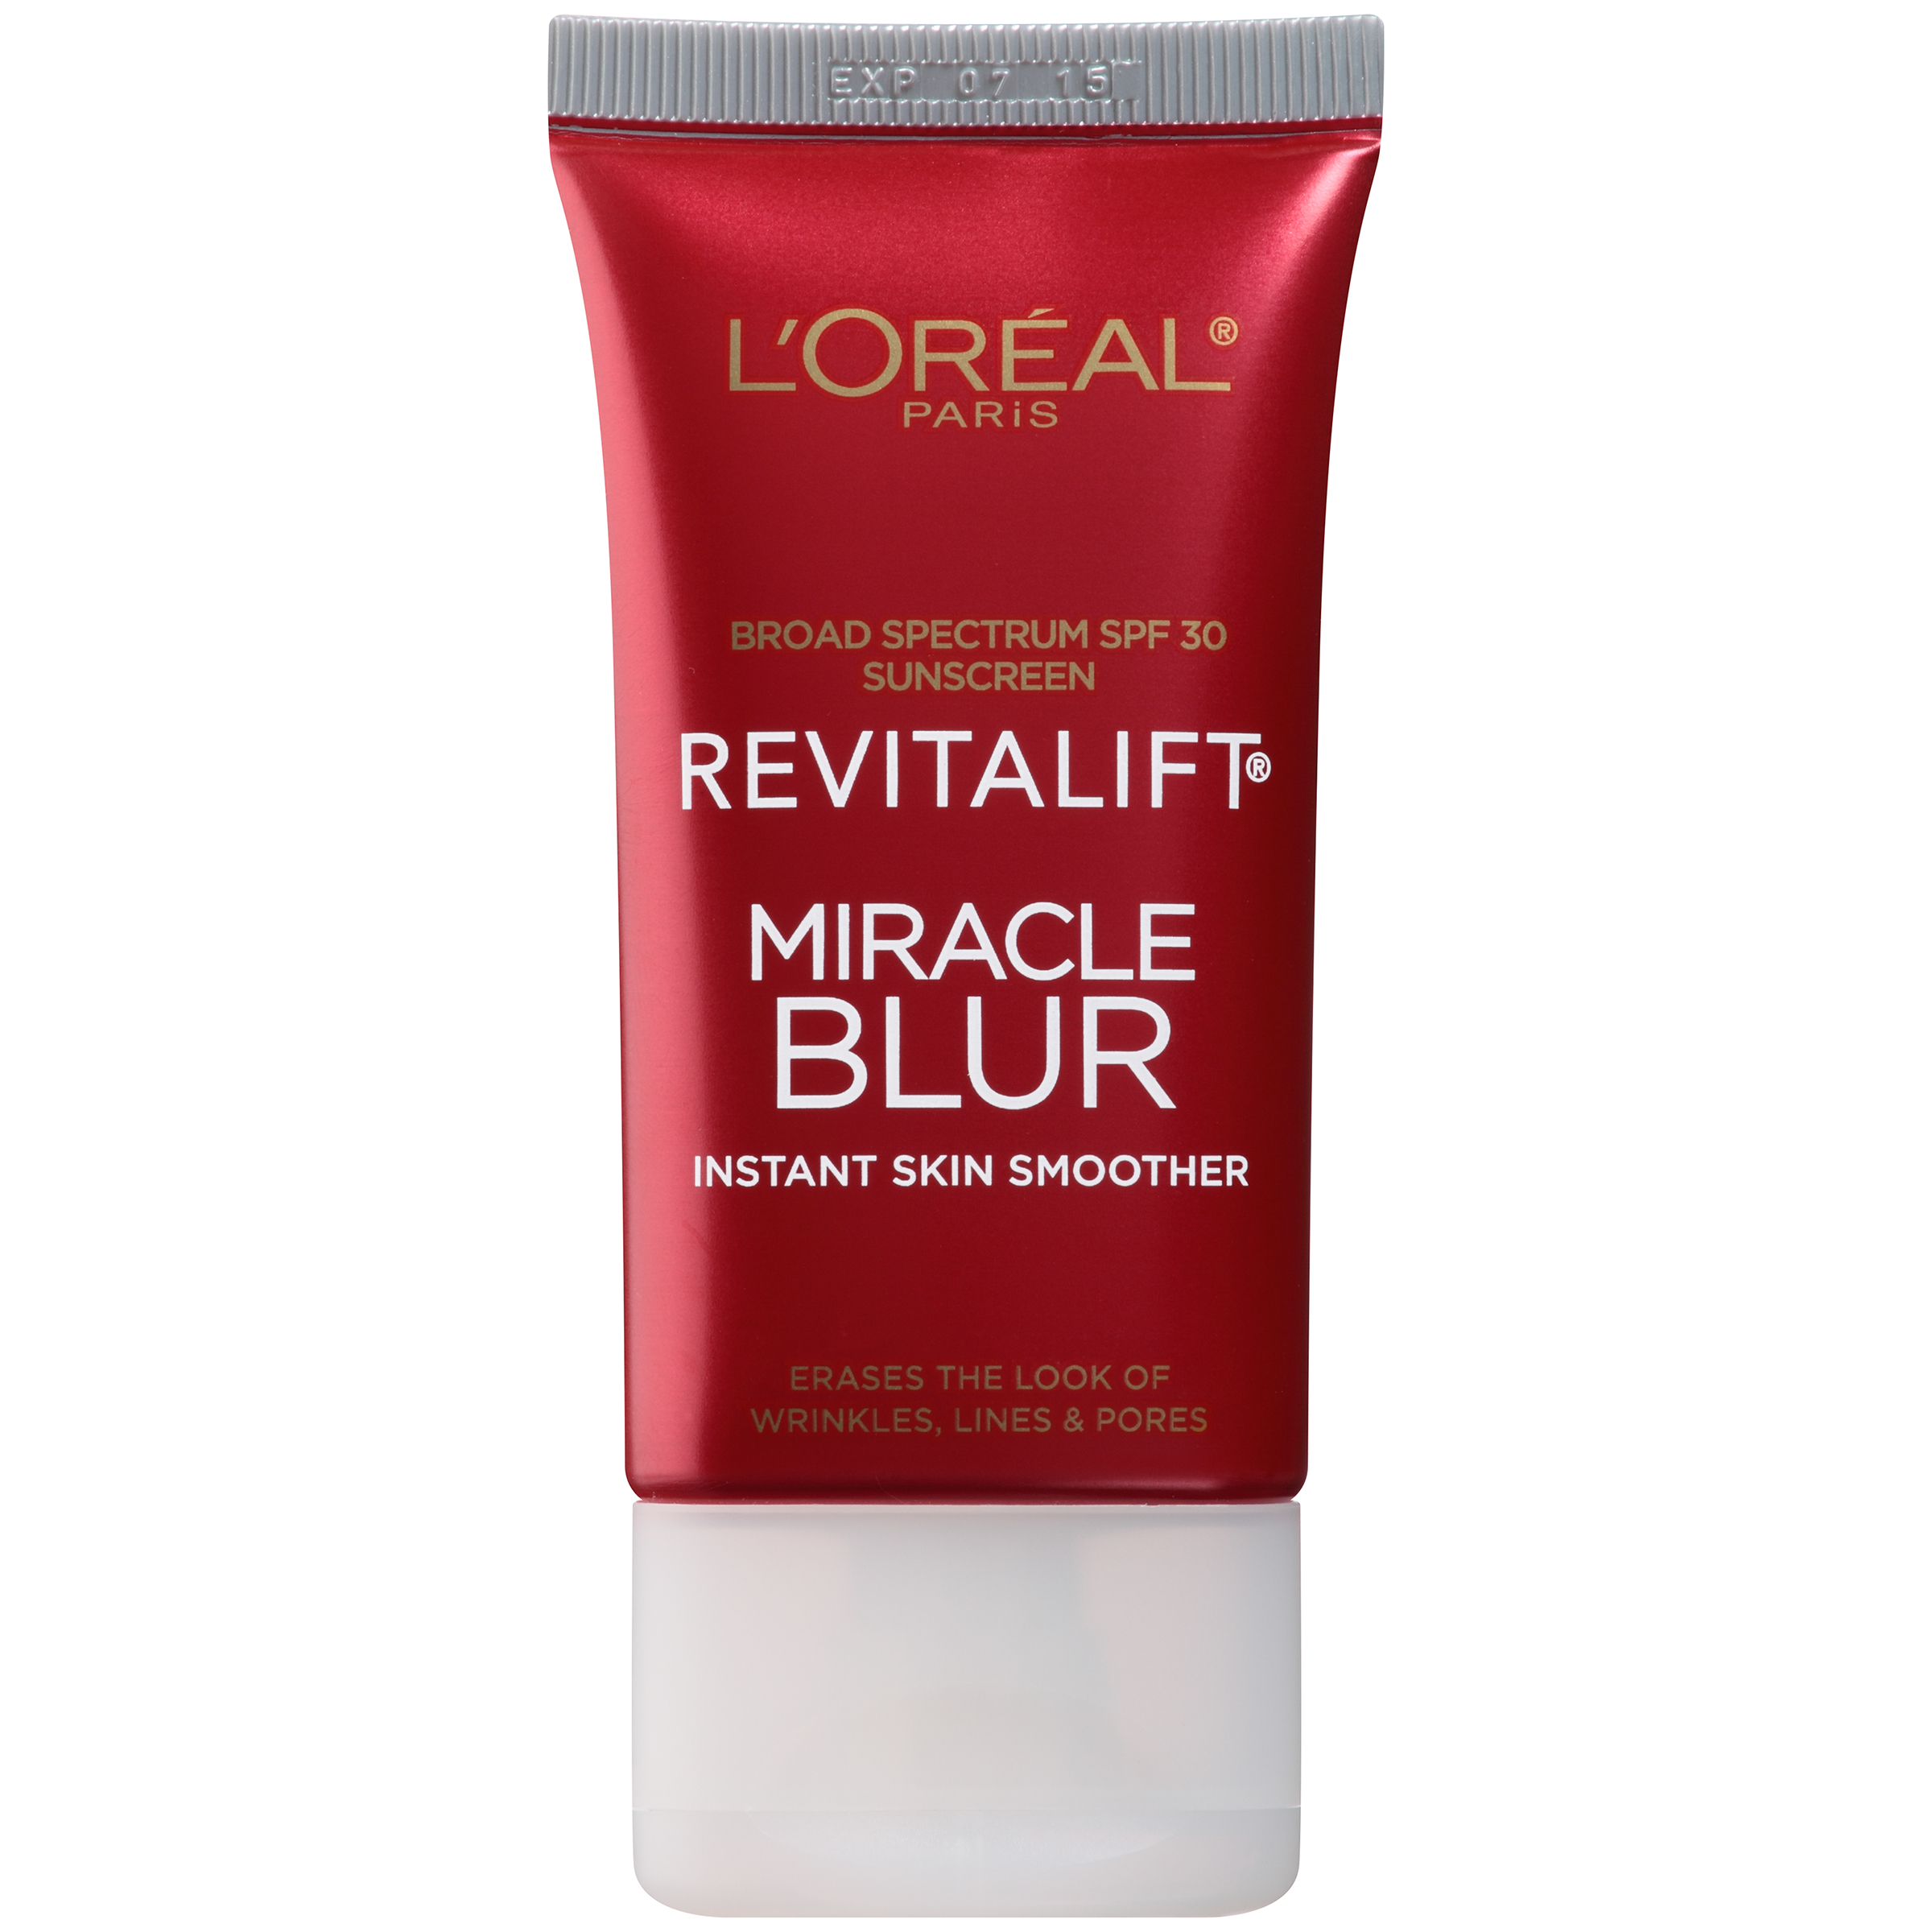 L'Oreal Paris Revitalift Miracle Blur Broad Spectrum SPF 30 Sunscreen 1.18 fl oz - image 1 of 6